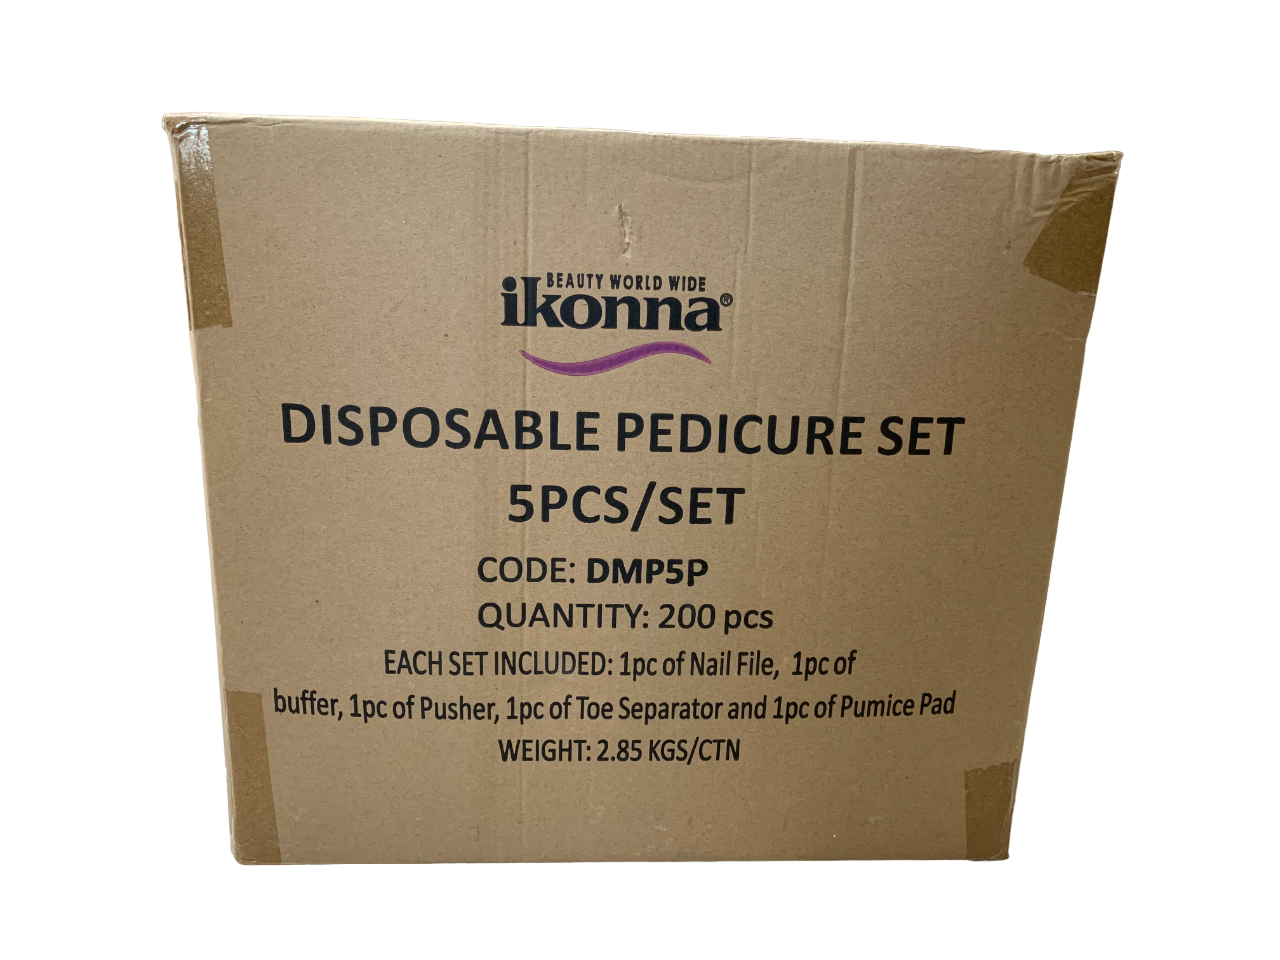 Ikonna Disposable Pedicure Kit Case